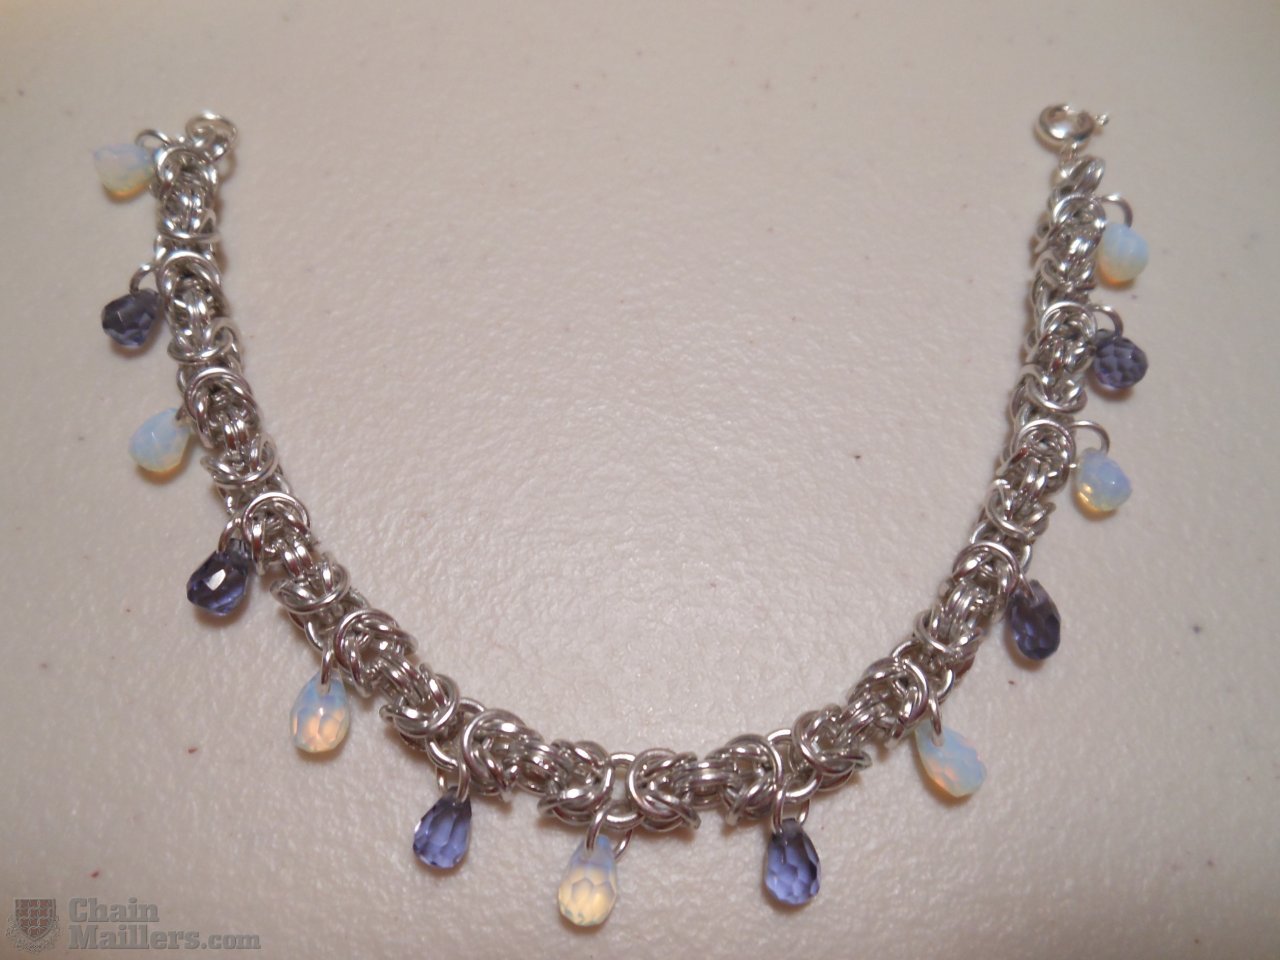 Byzantine and Beads